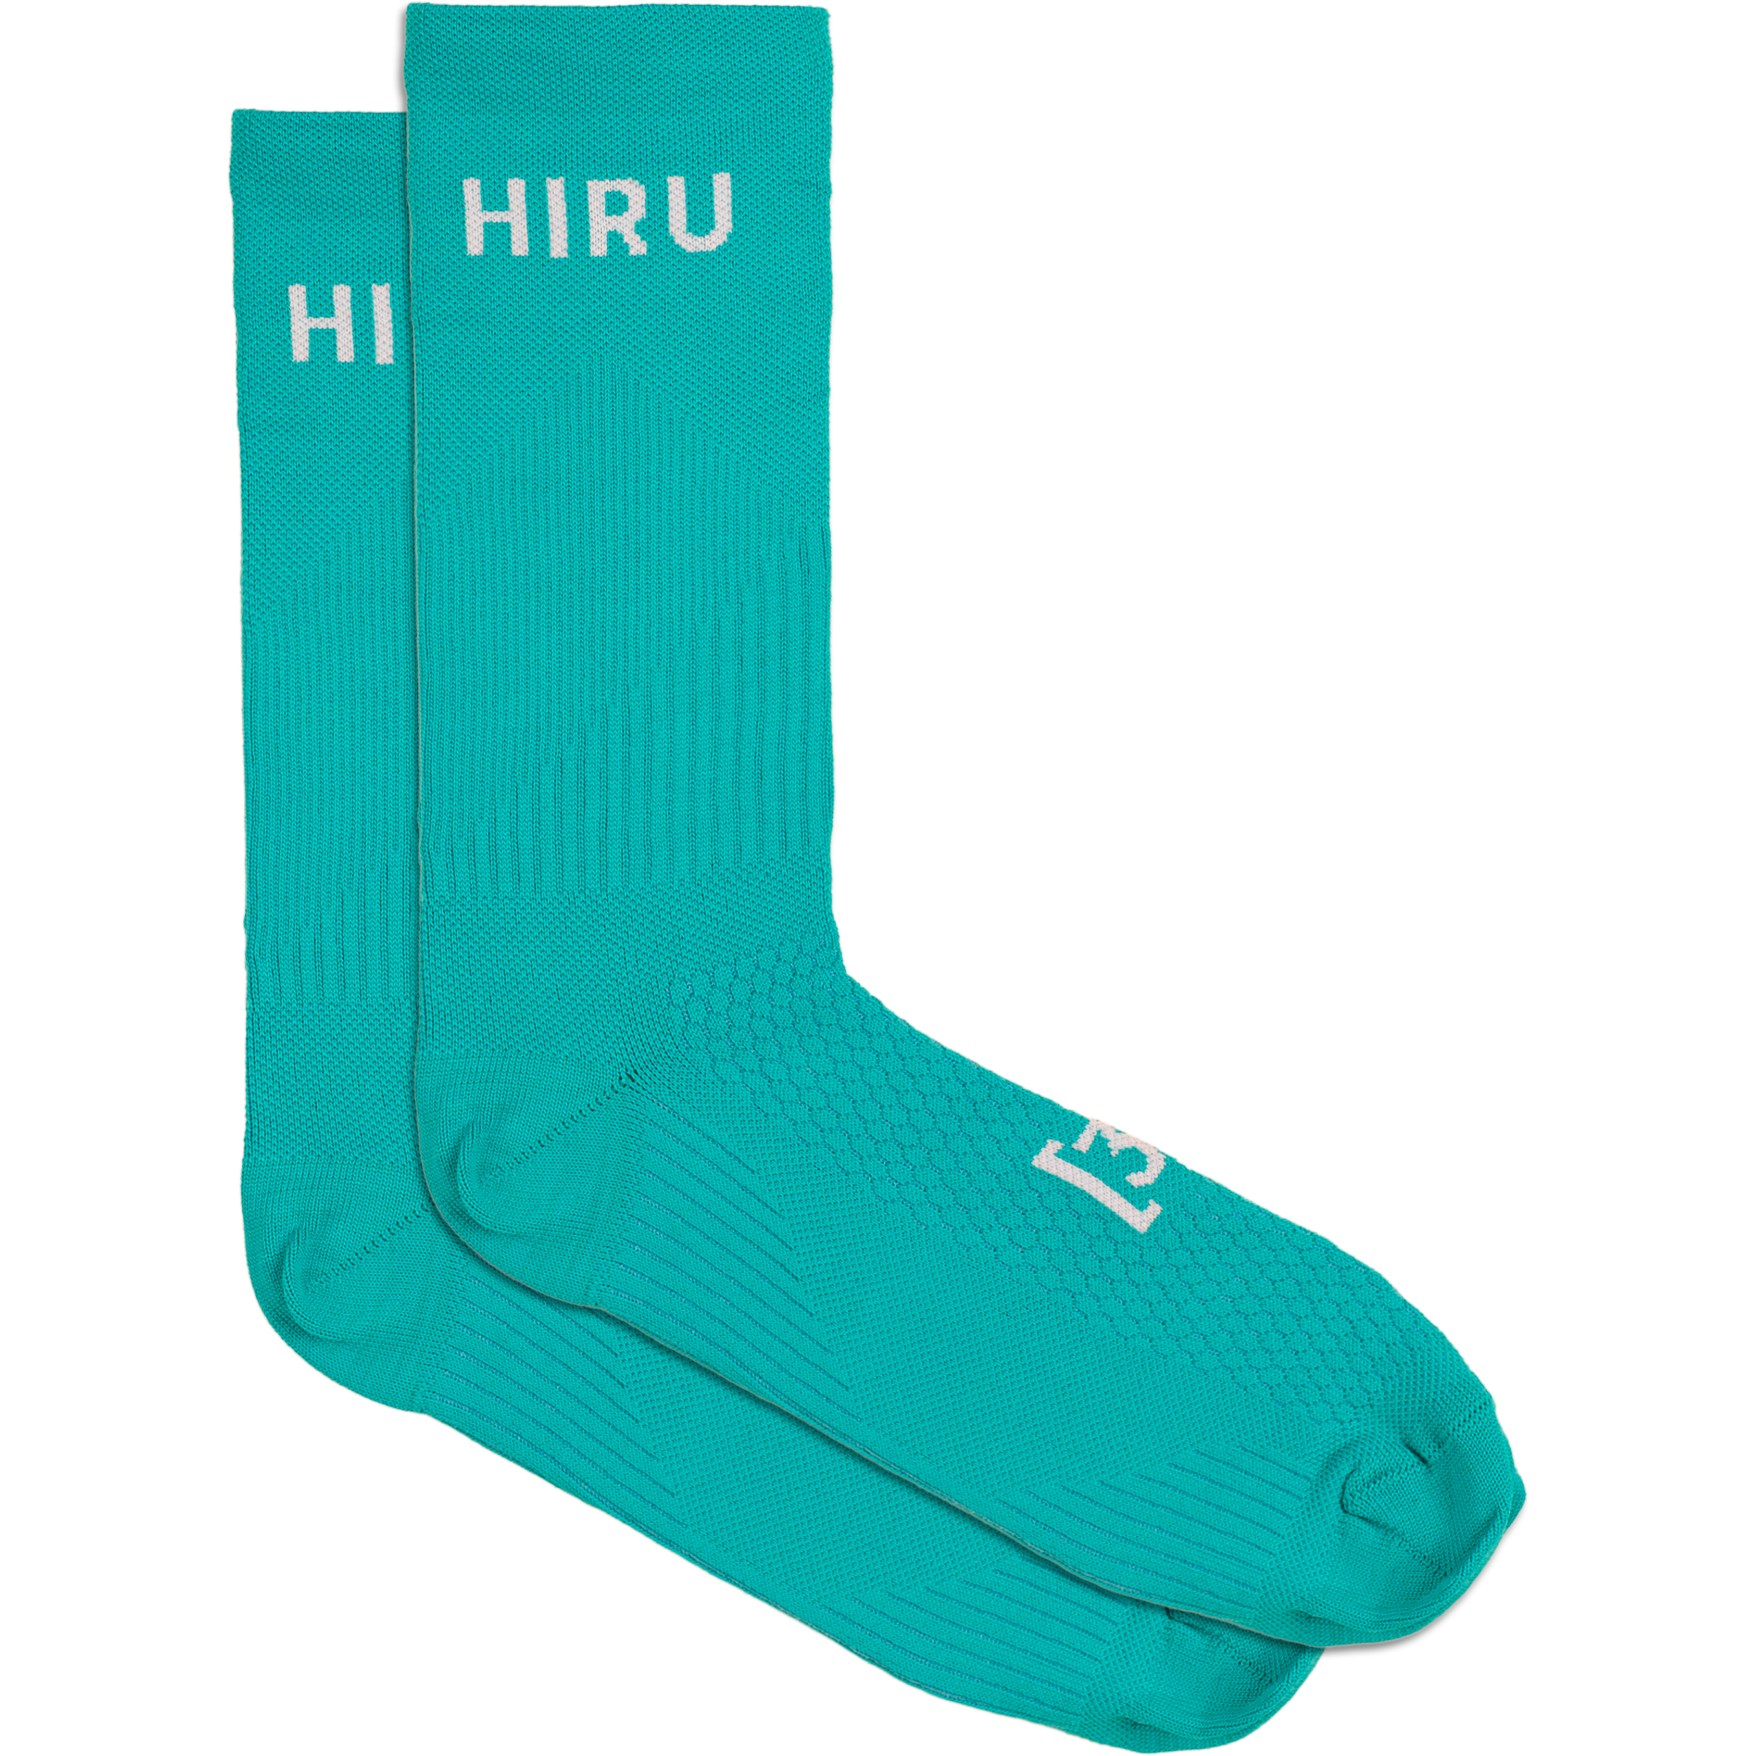 Picture of Hiru Qskin Socks - ocean green